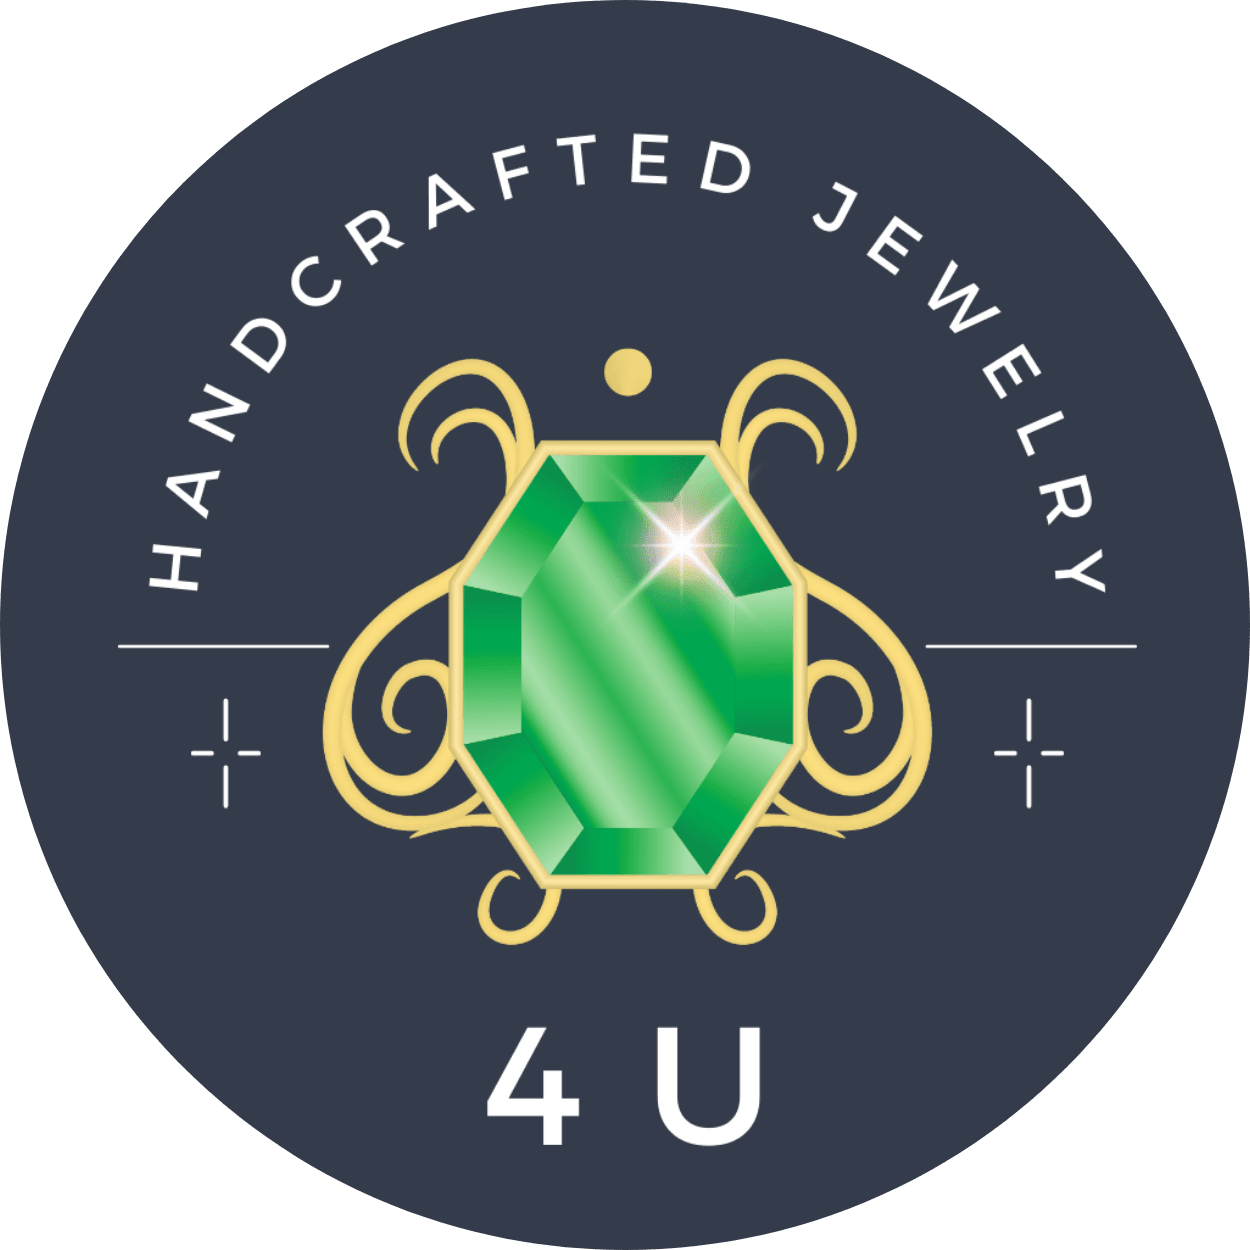 4U - Handcrafted Jewelry Designs, LLC.